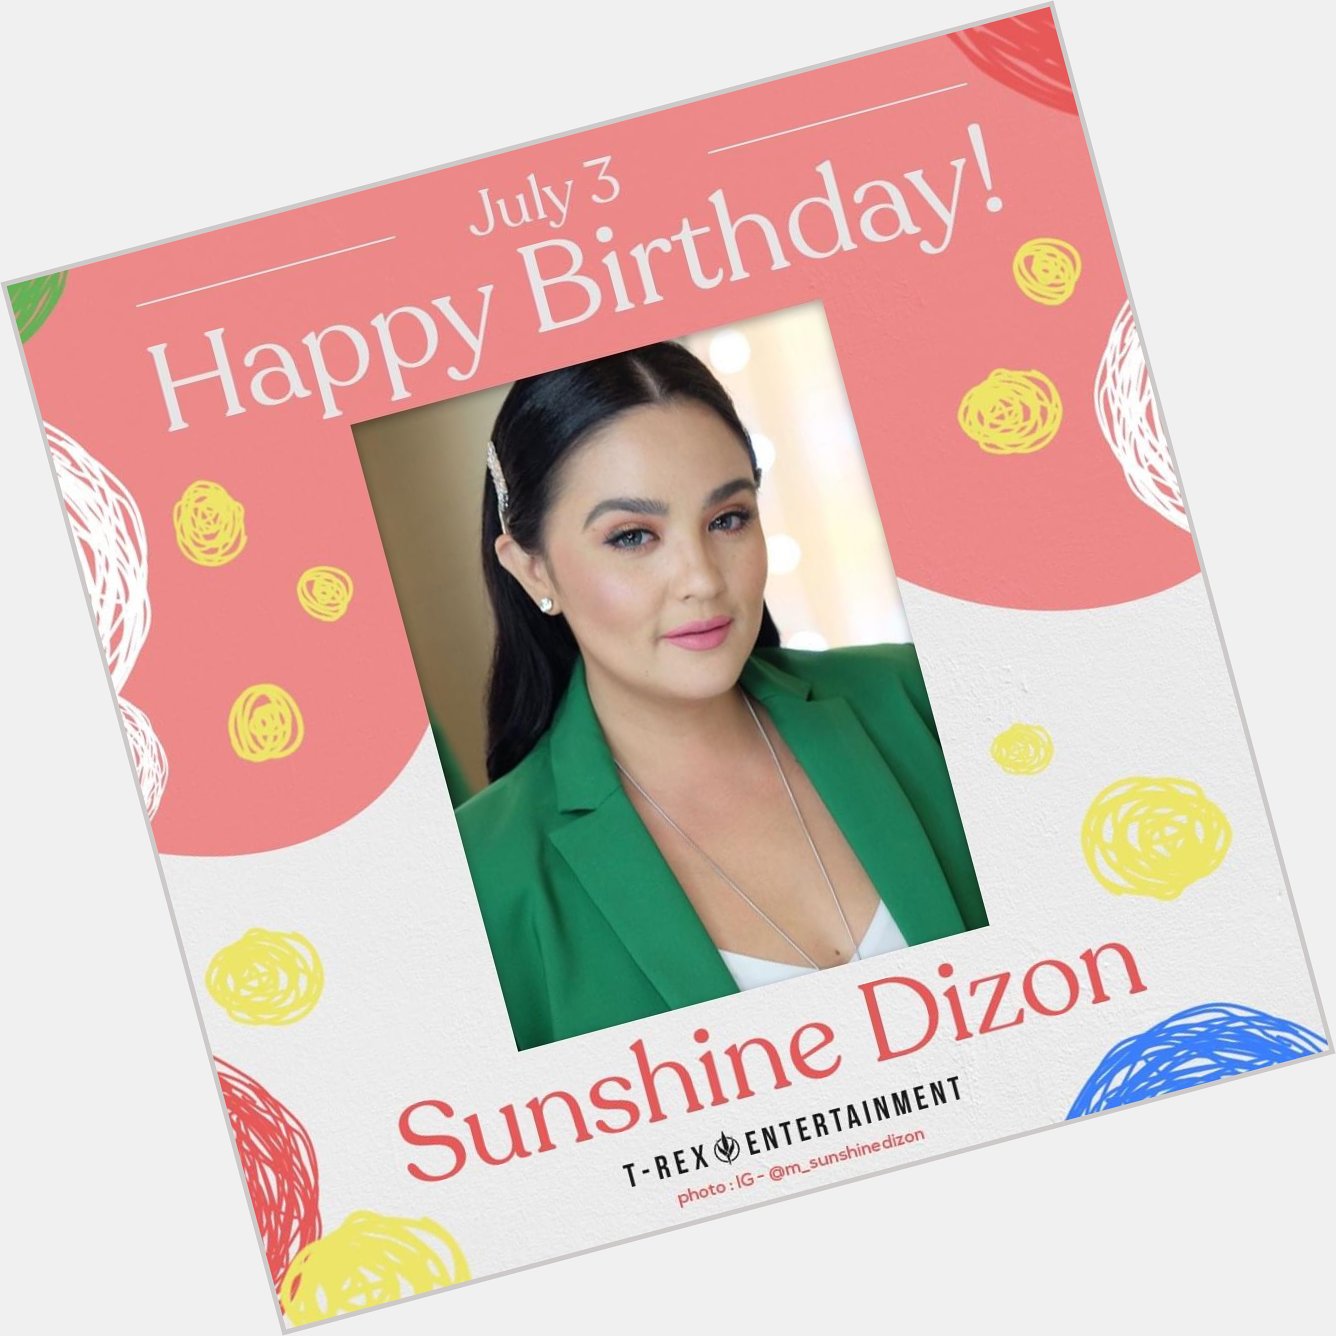 Happy birthday to you, Sunshine Dizon! 

Enjoy your special day. 